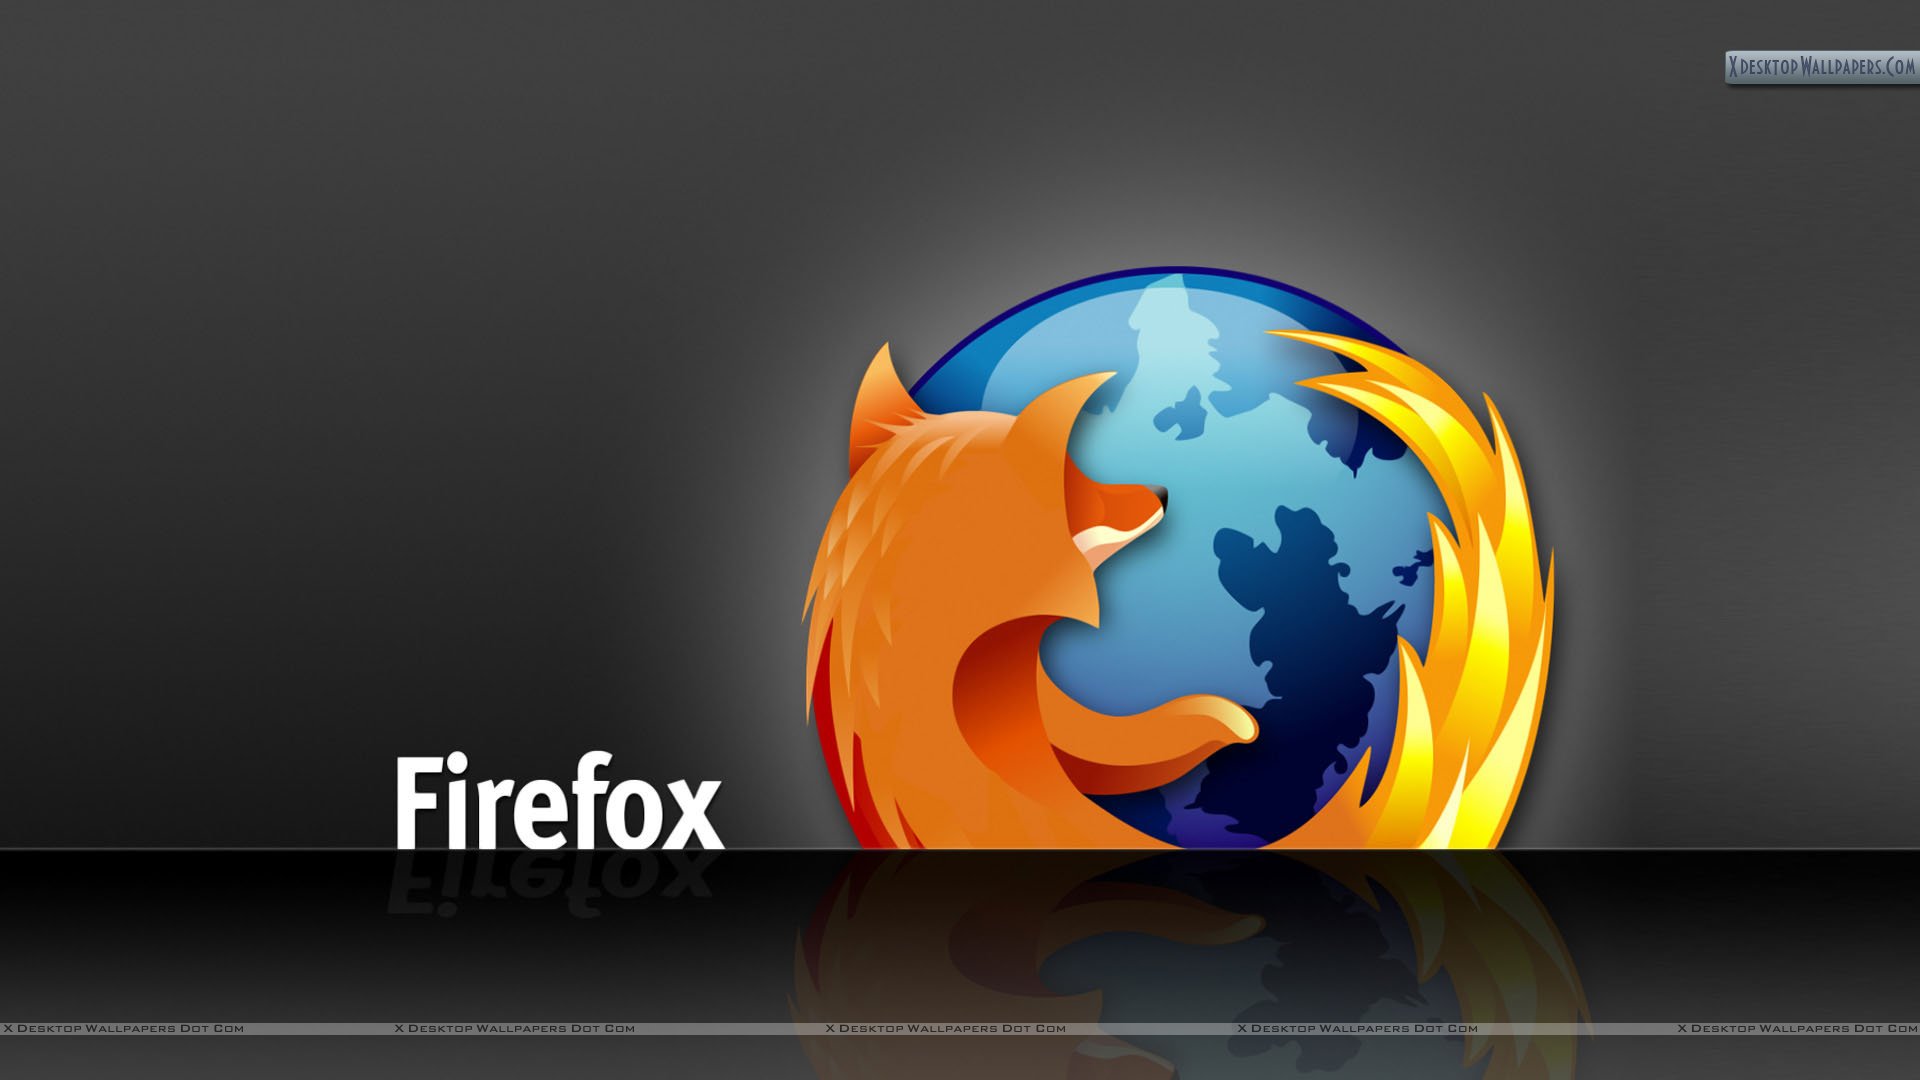 Mozilla Firefox Wallpaper Photos Image In HD